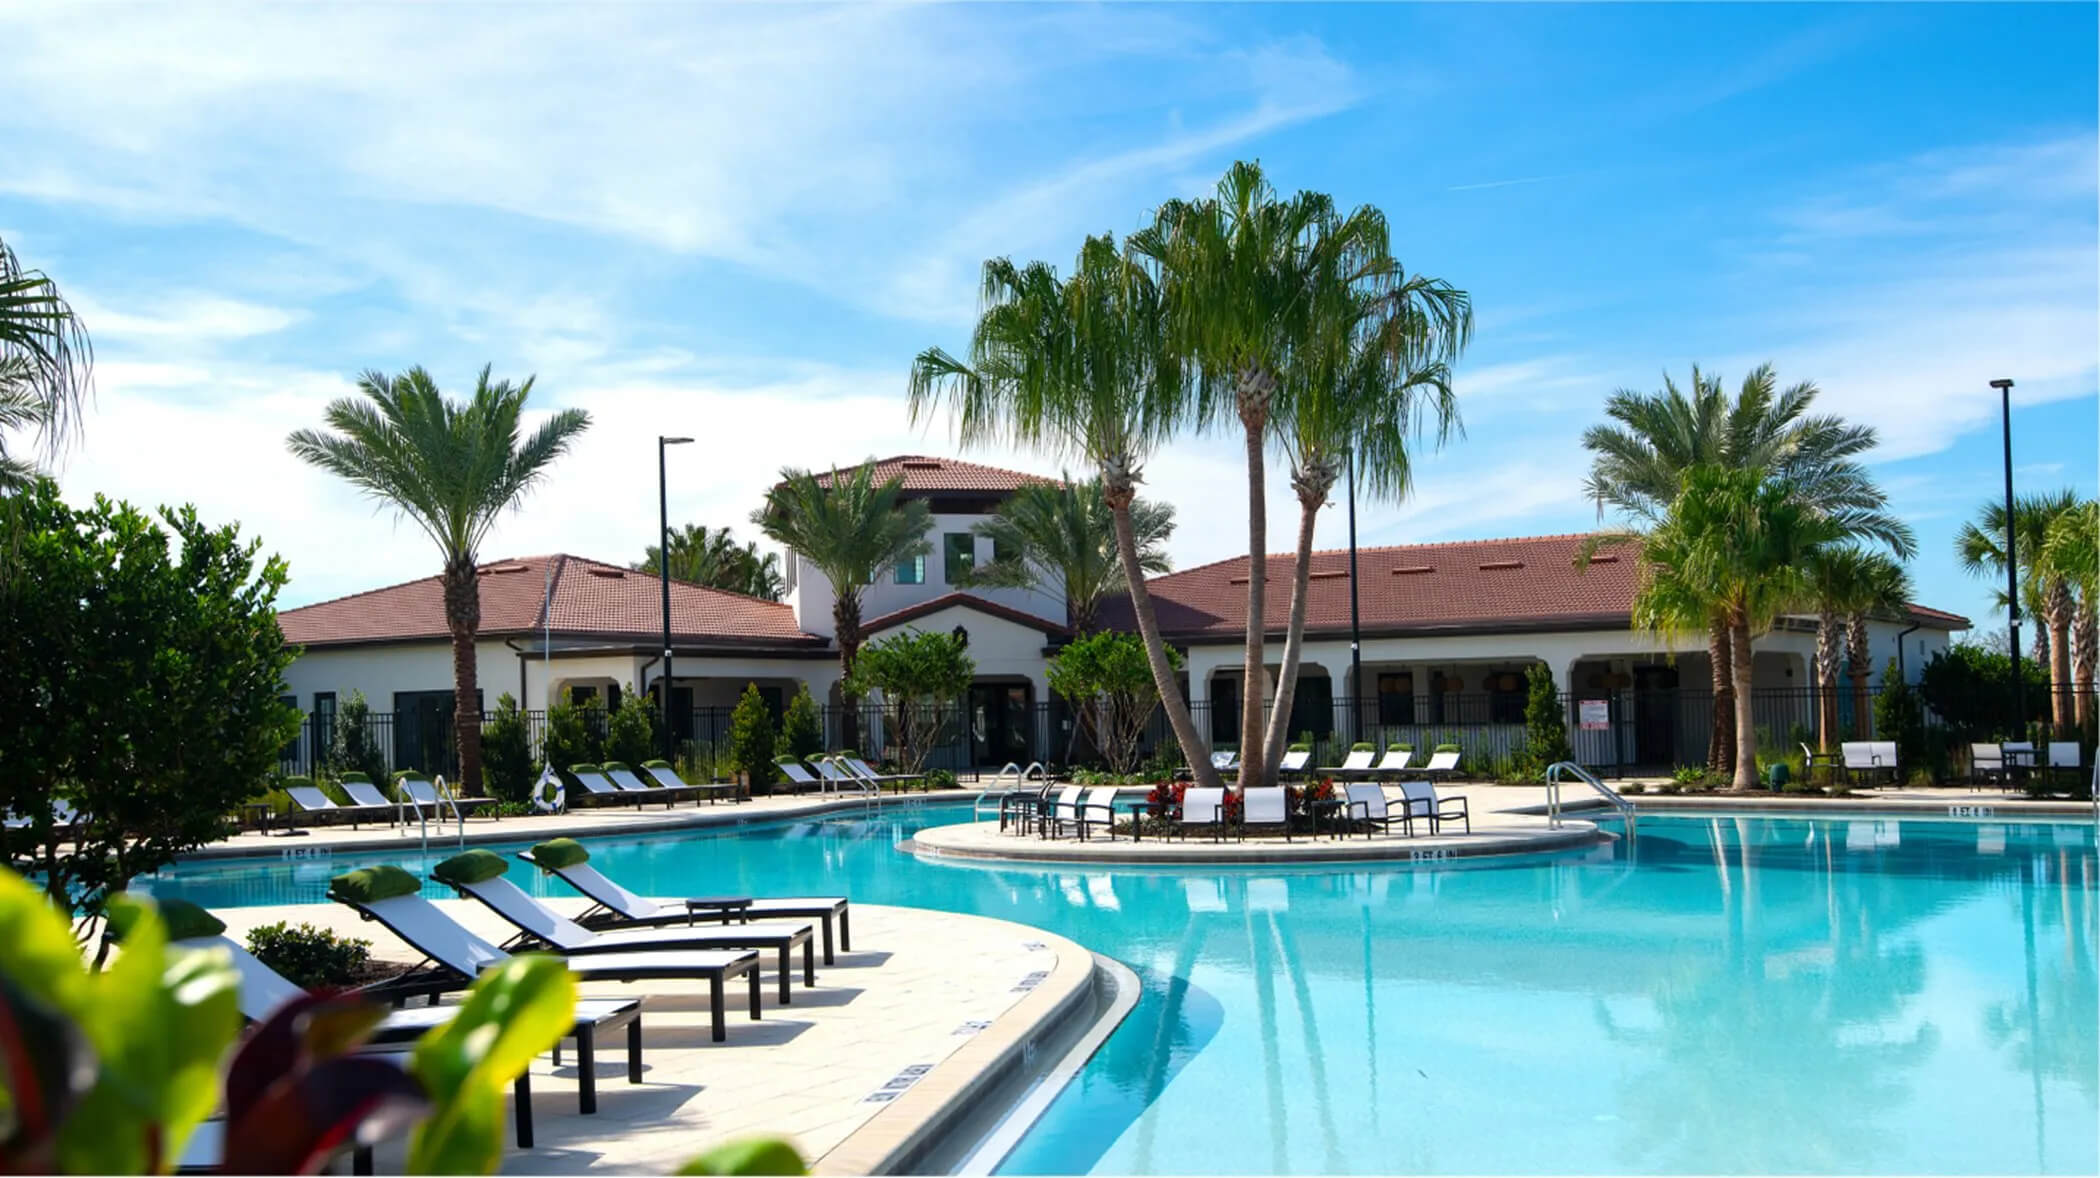 wimauma southshore bay 55+community Florida - outdoor pool